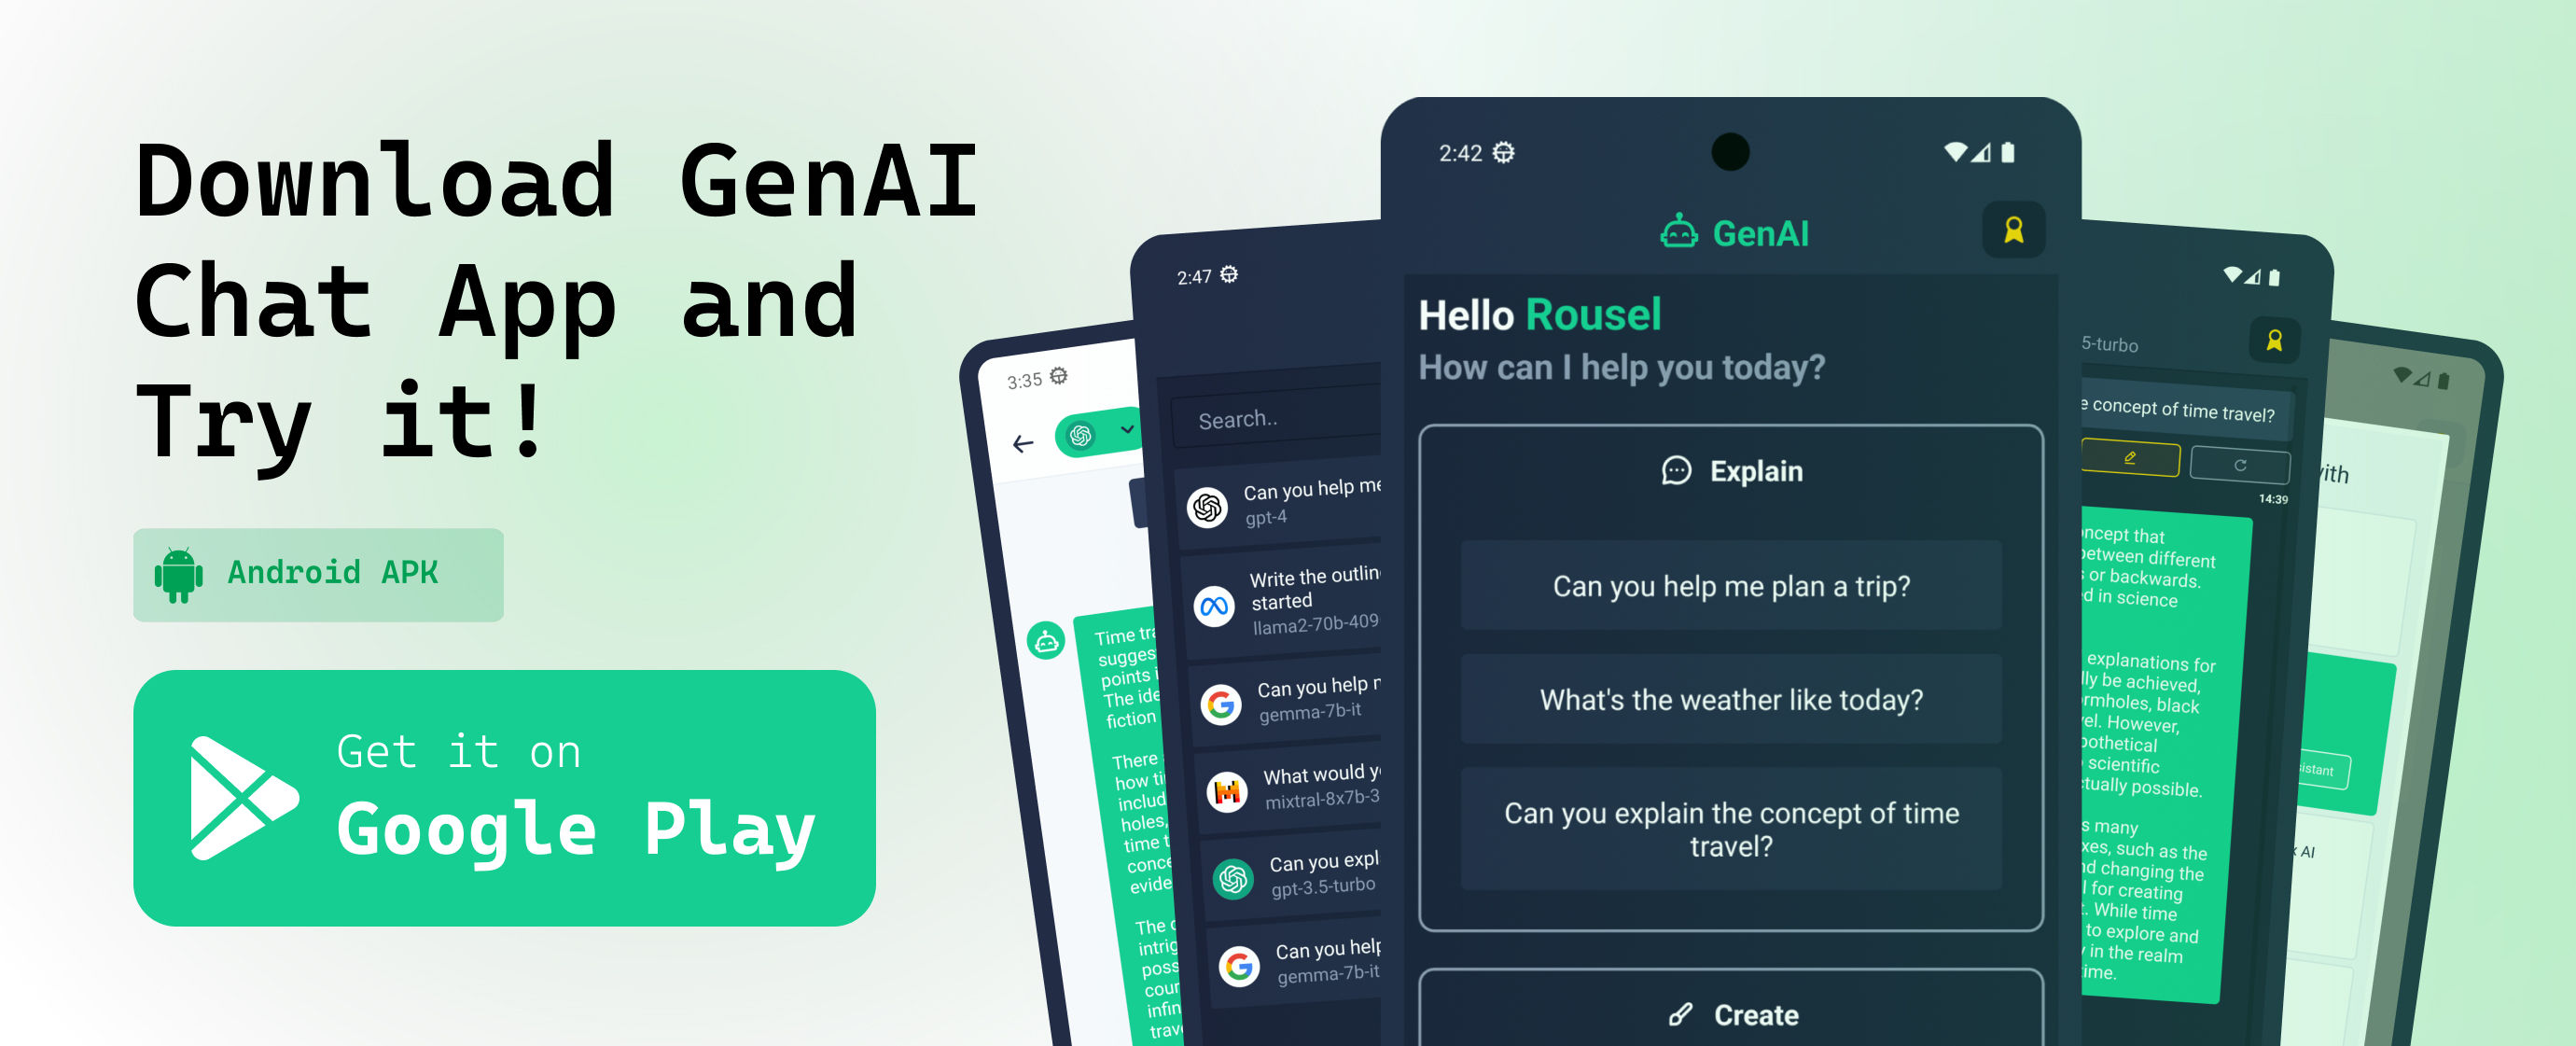 GenAI Chat - React Native AI Chat Application Template - Download demo